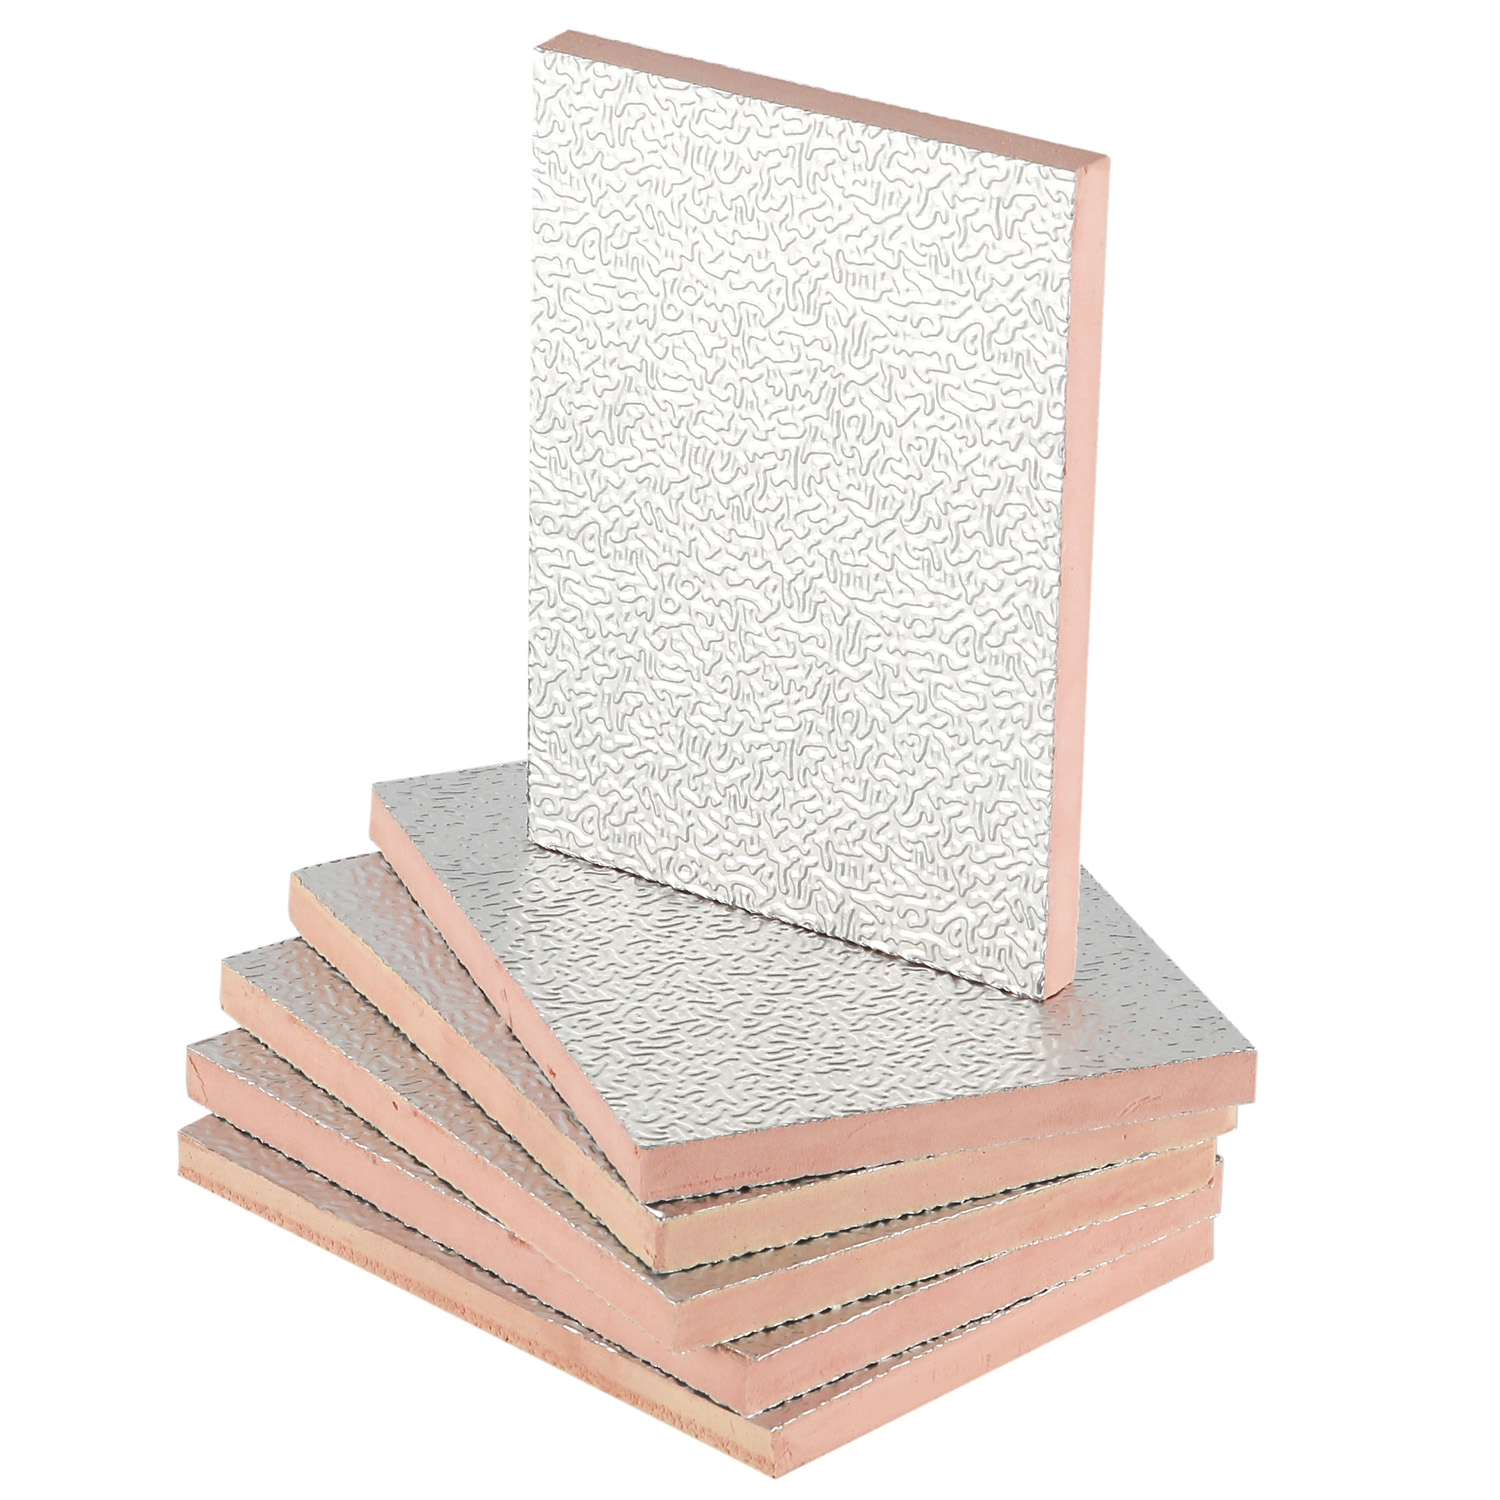  Aluminum Foil Phenolic Insulation Board